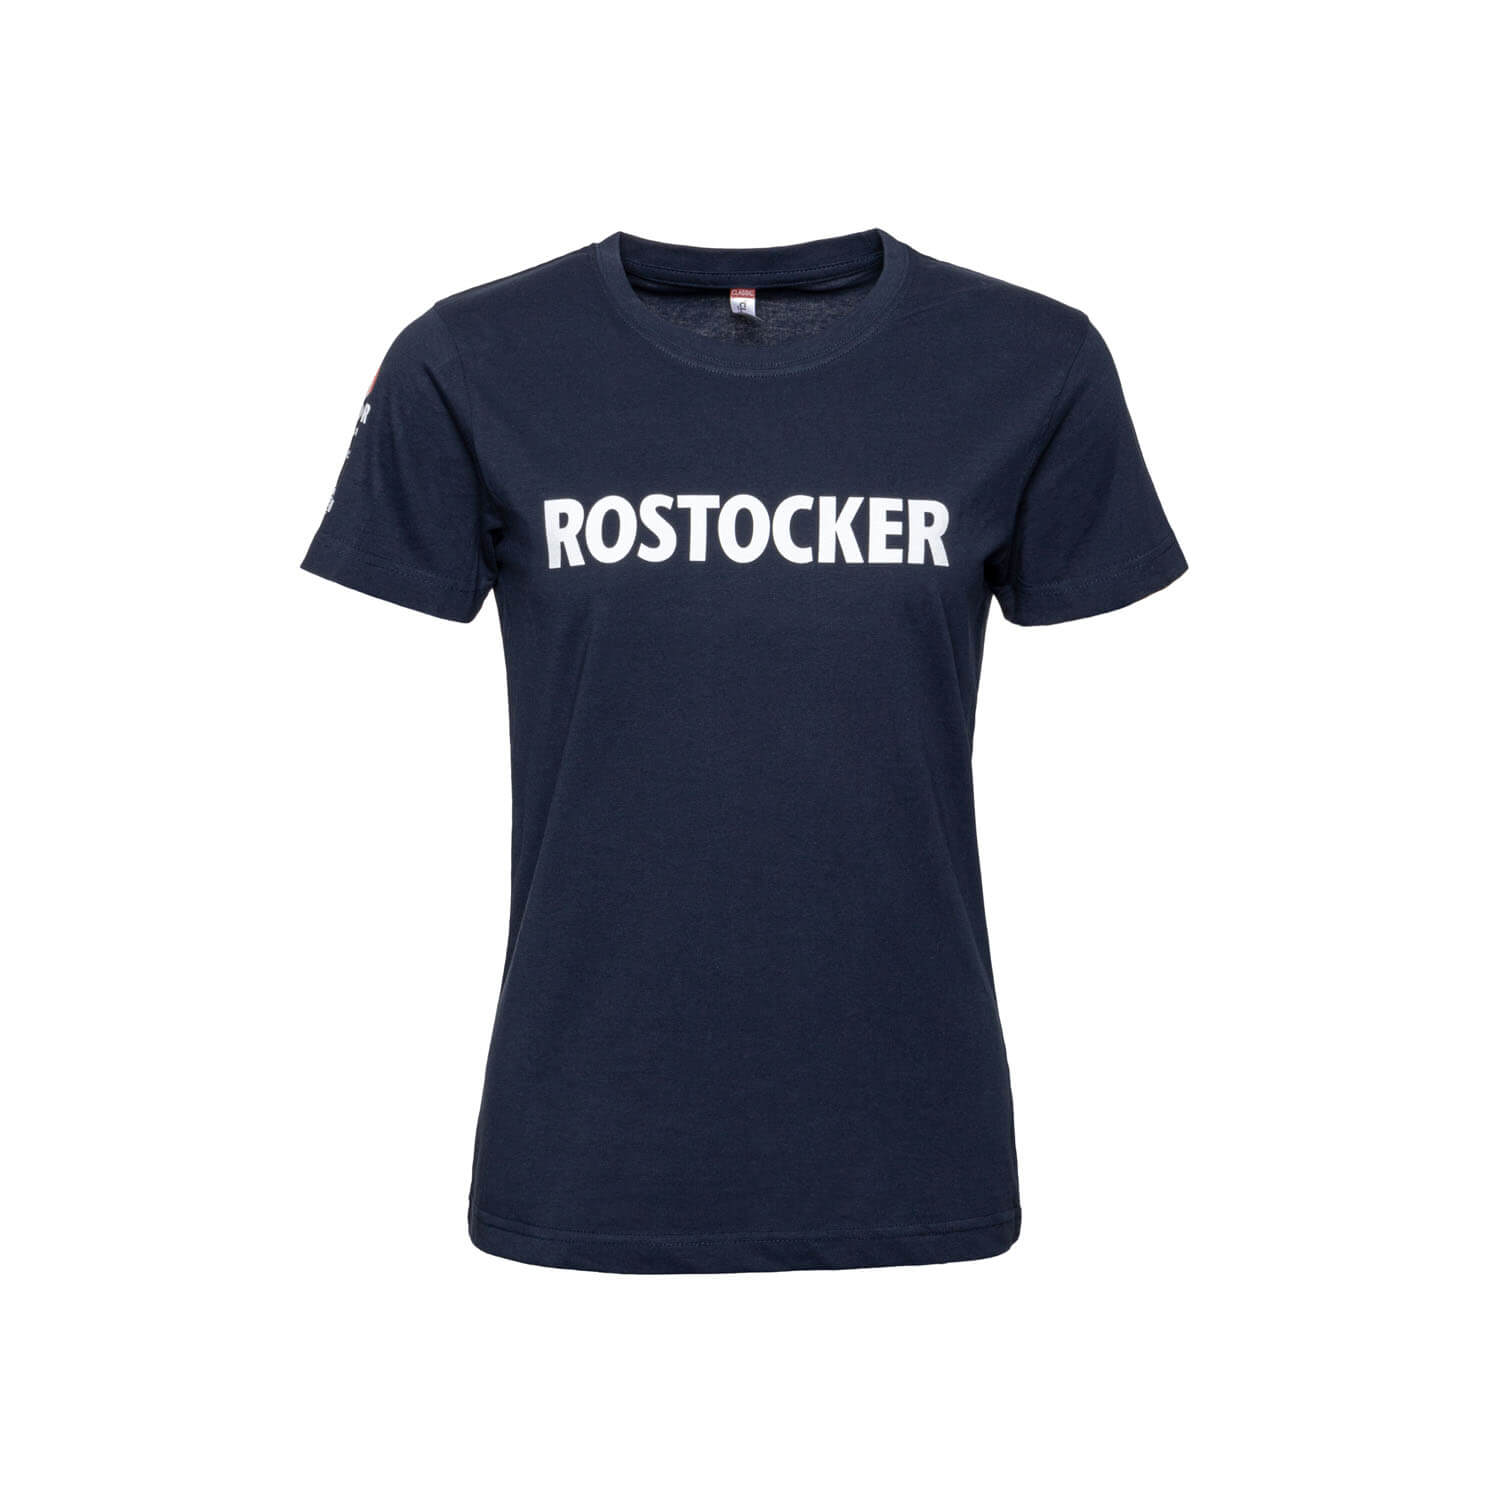 Rostocker Damen T-Shirt HANSE SAIL 2023, Gr. M